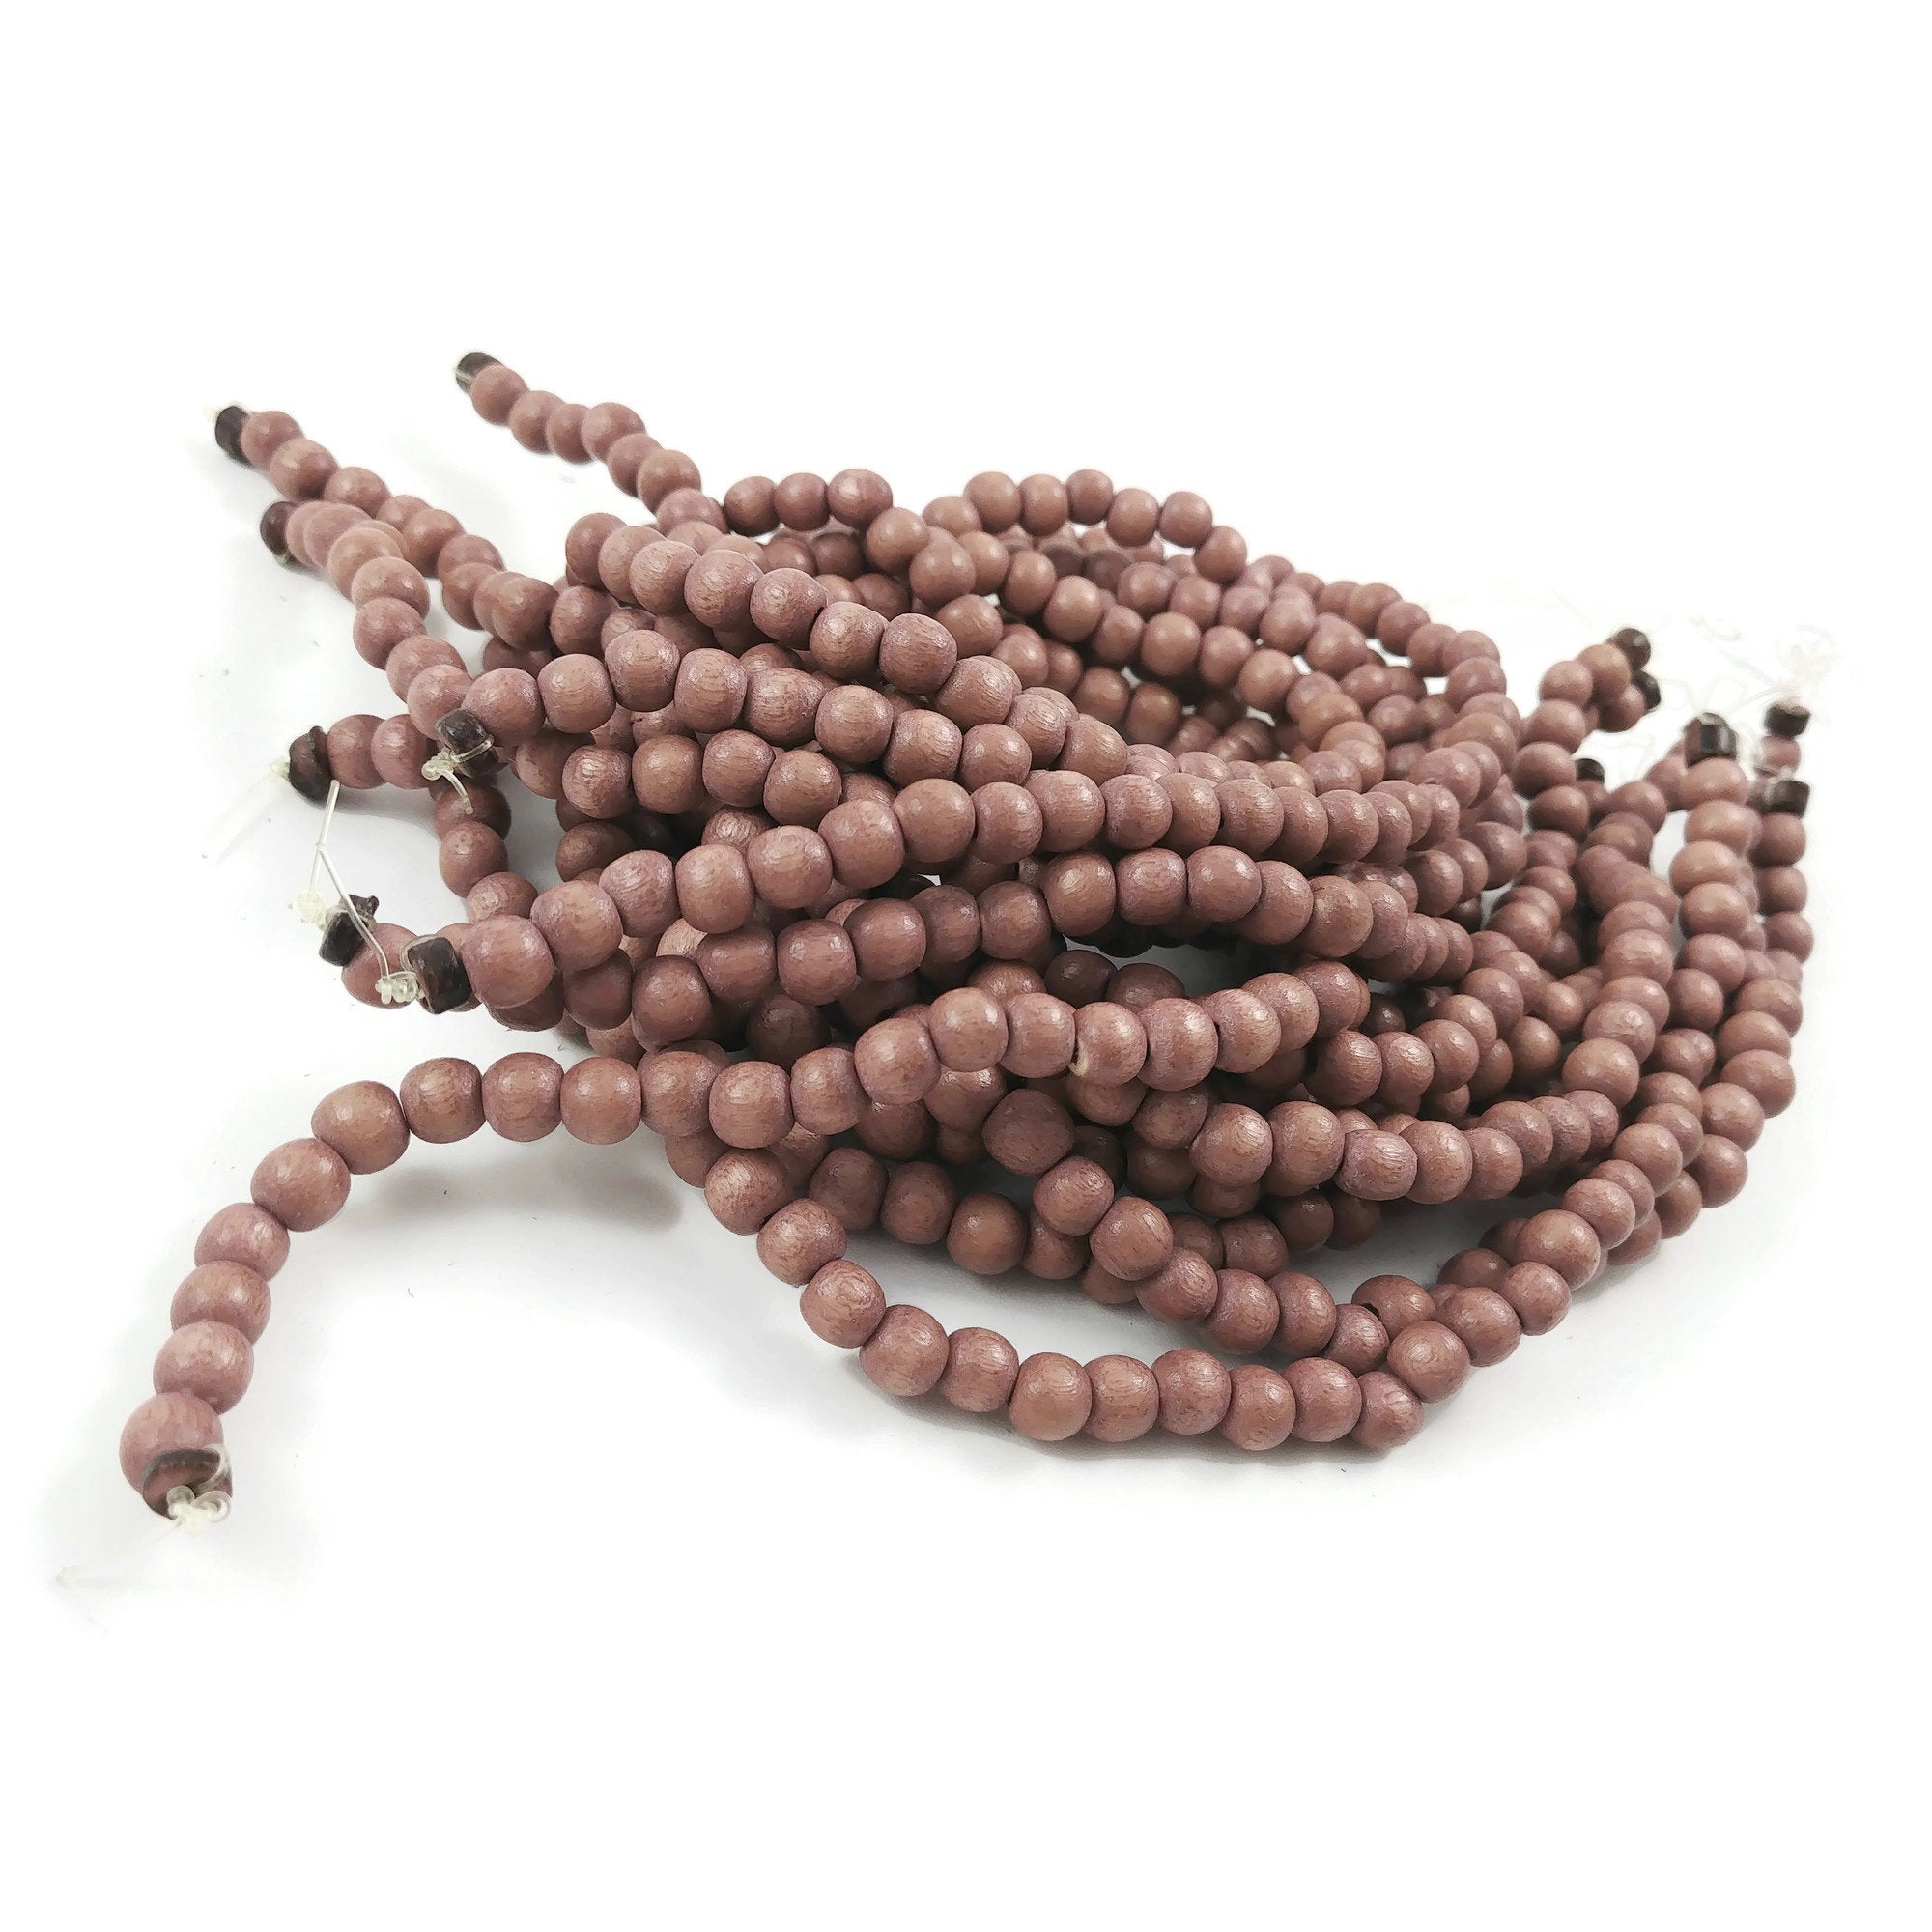 Ebony beads 6mm, 8mm, 10mm - Natural Mala Wooden Bead - Jewelry making